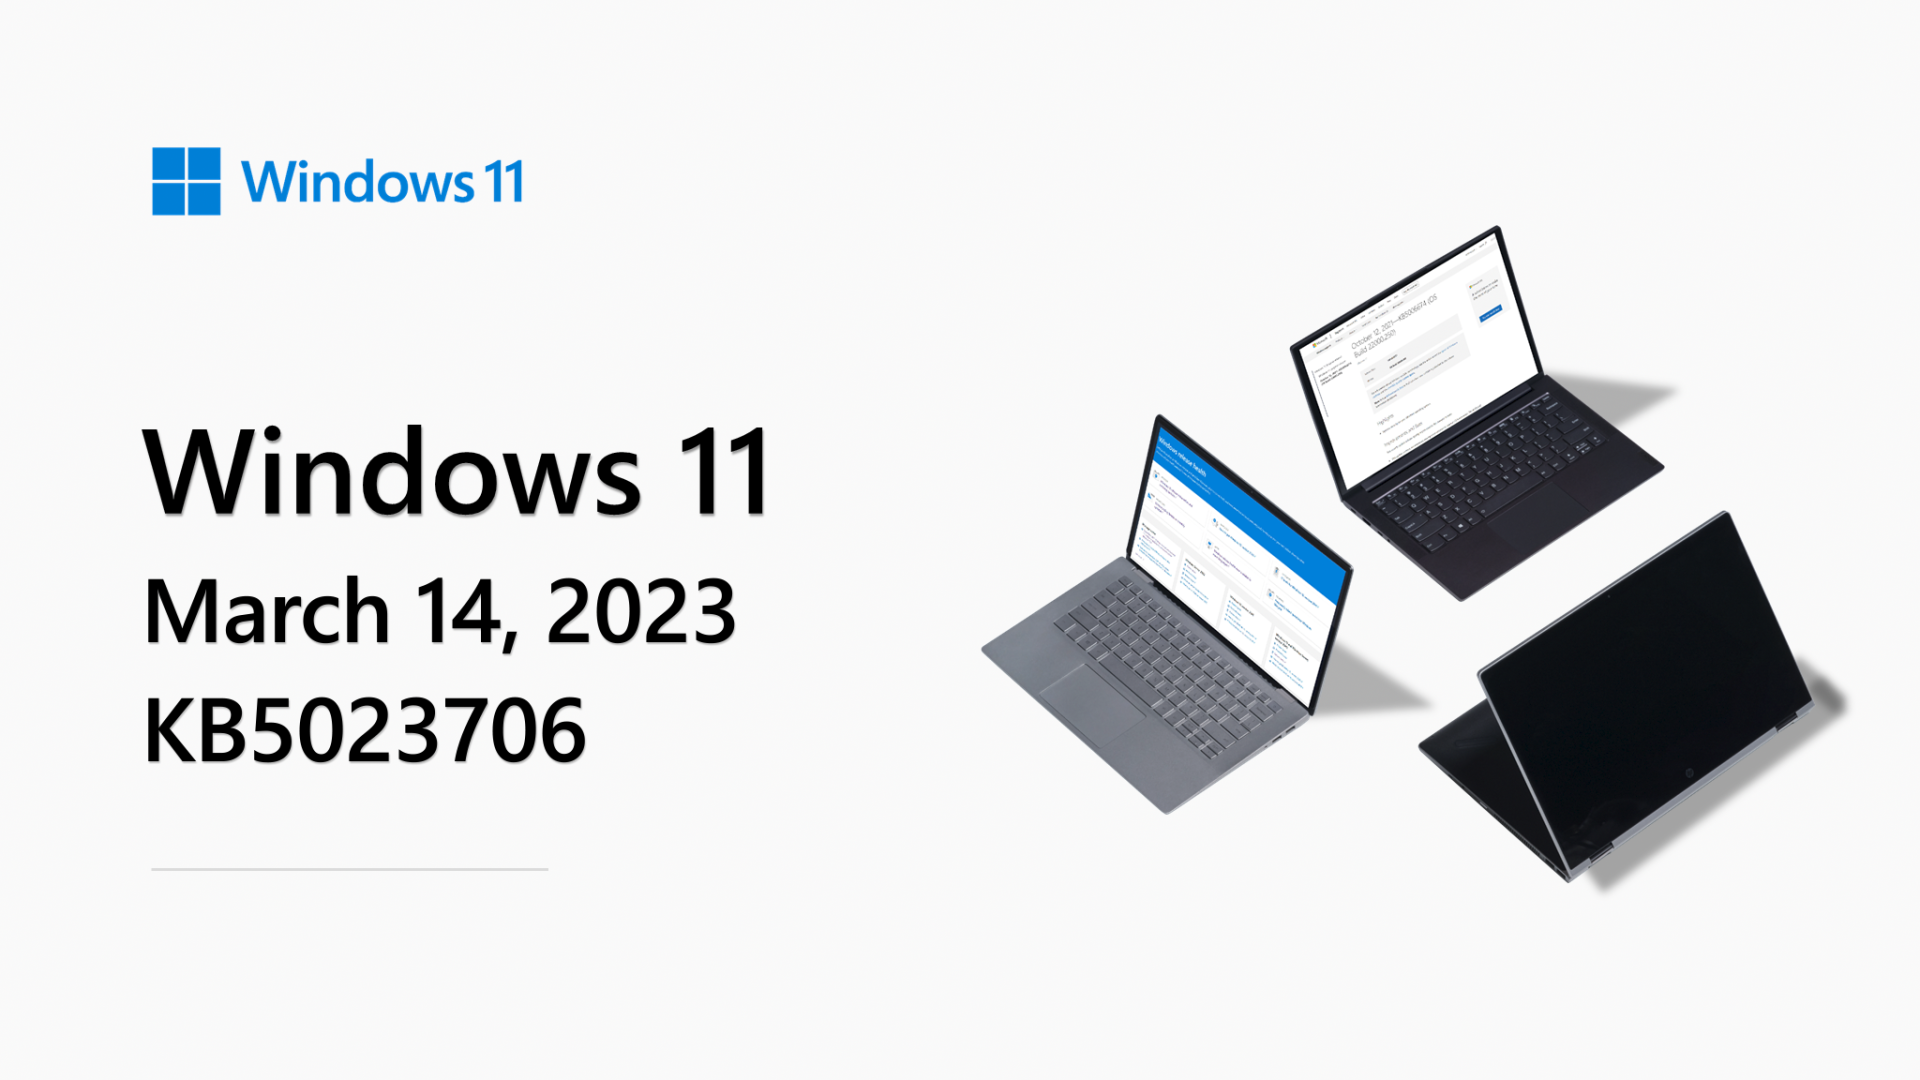 Windows 11 Pro Lite 22H2 Build 22621.1413 (x64) Windows 11 is light and not  heavy